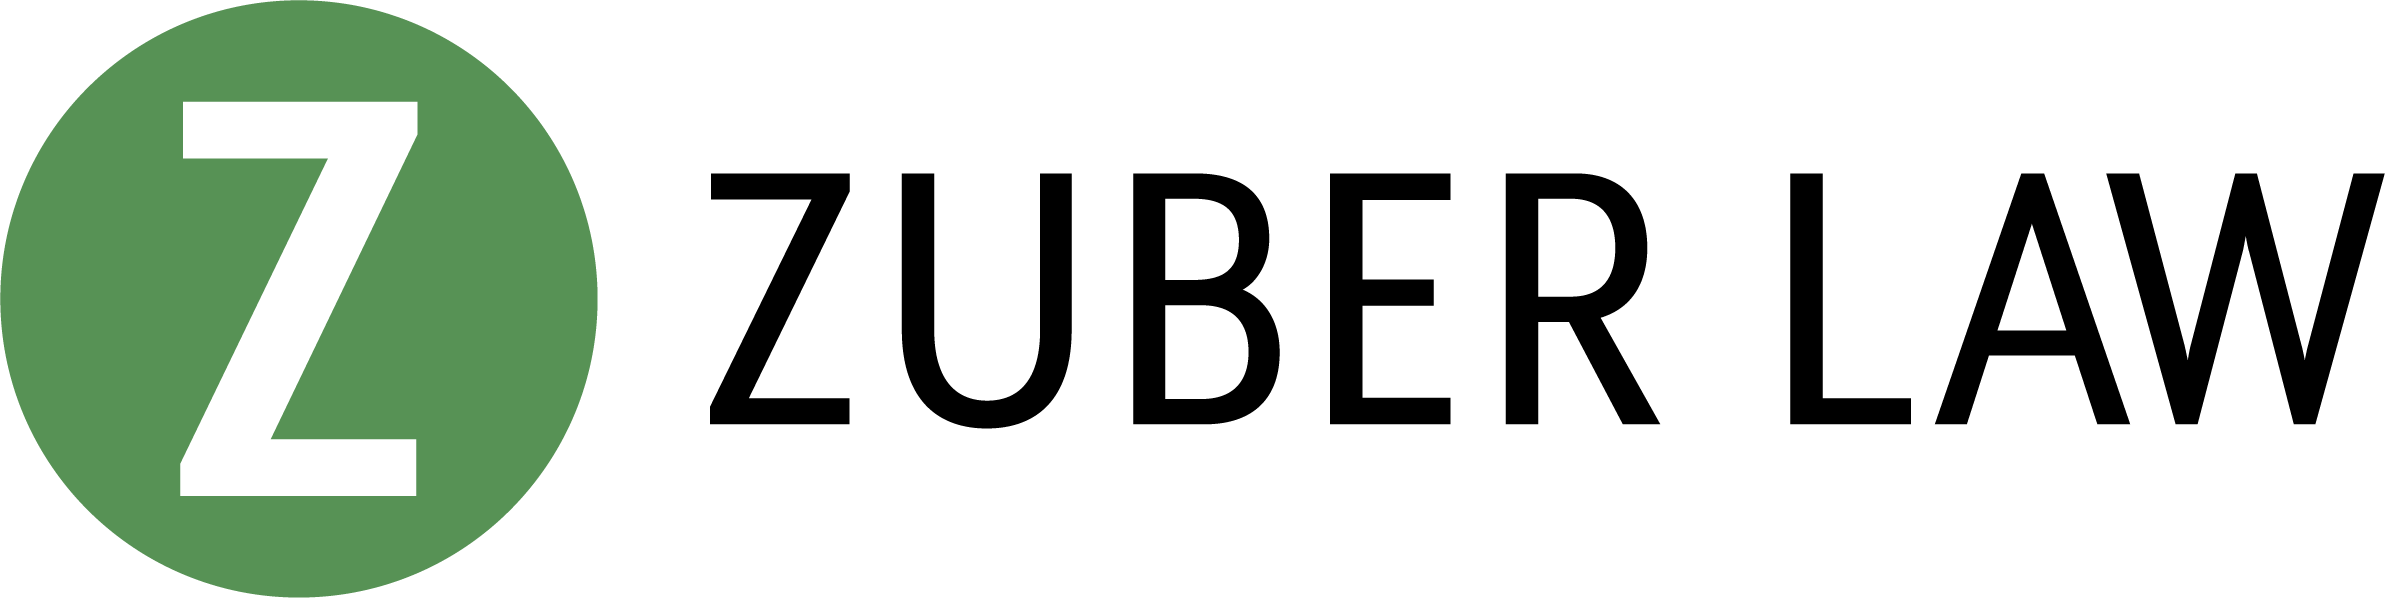 zuber law logo